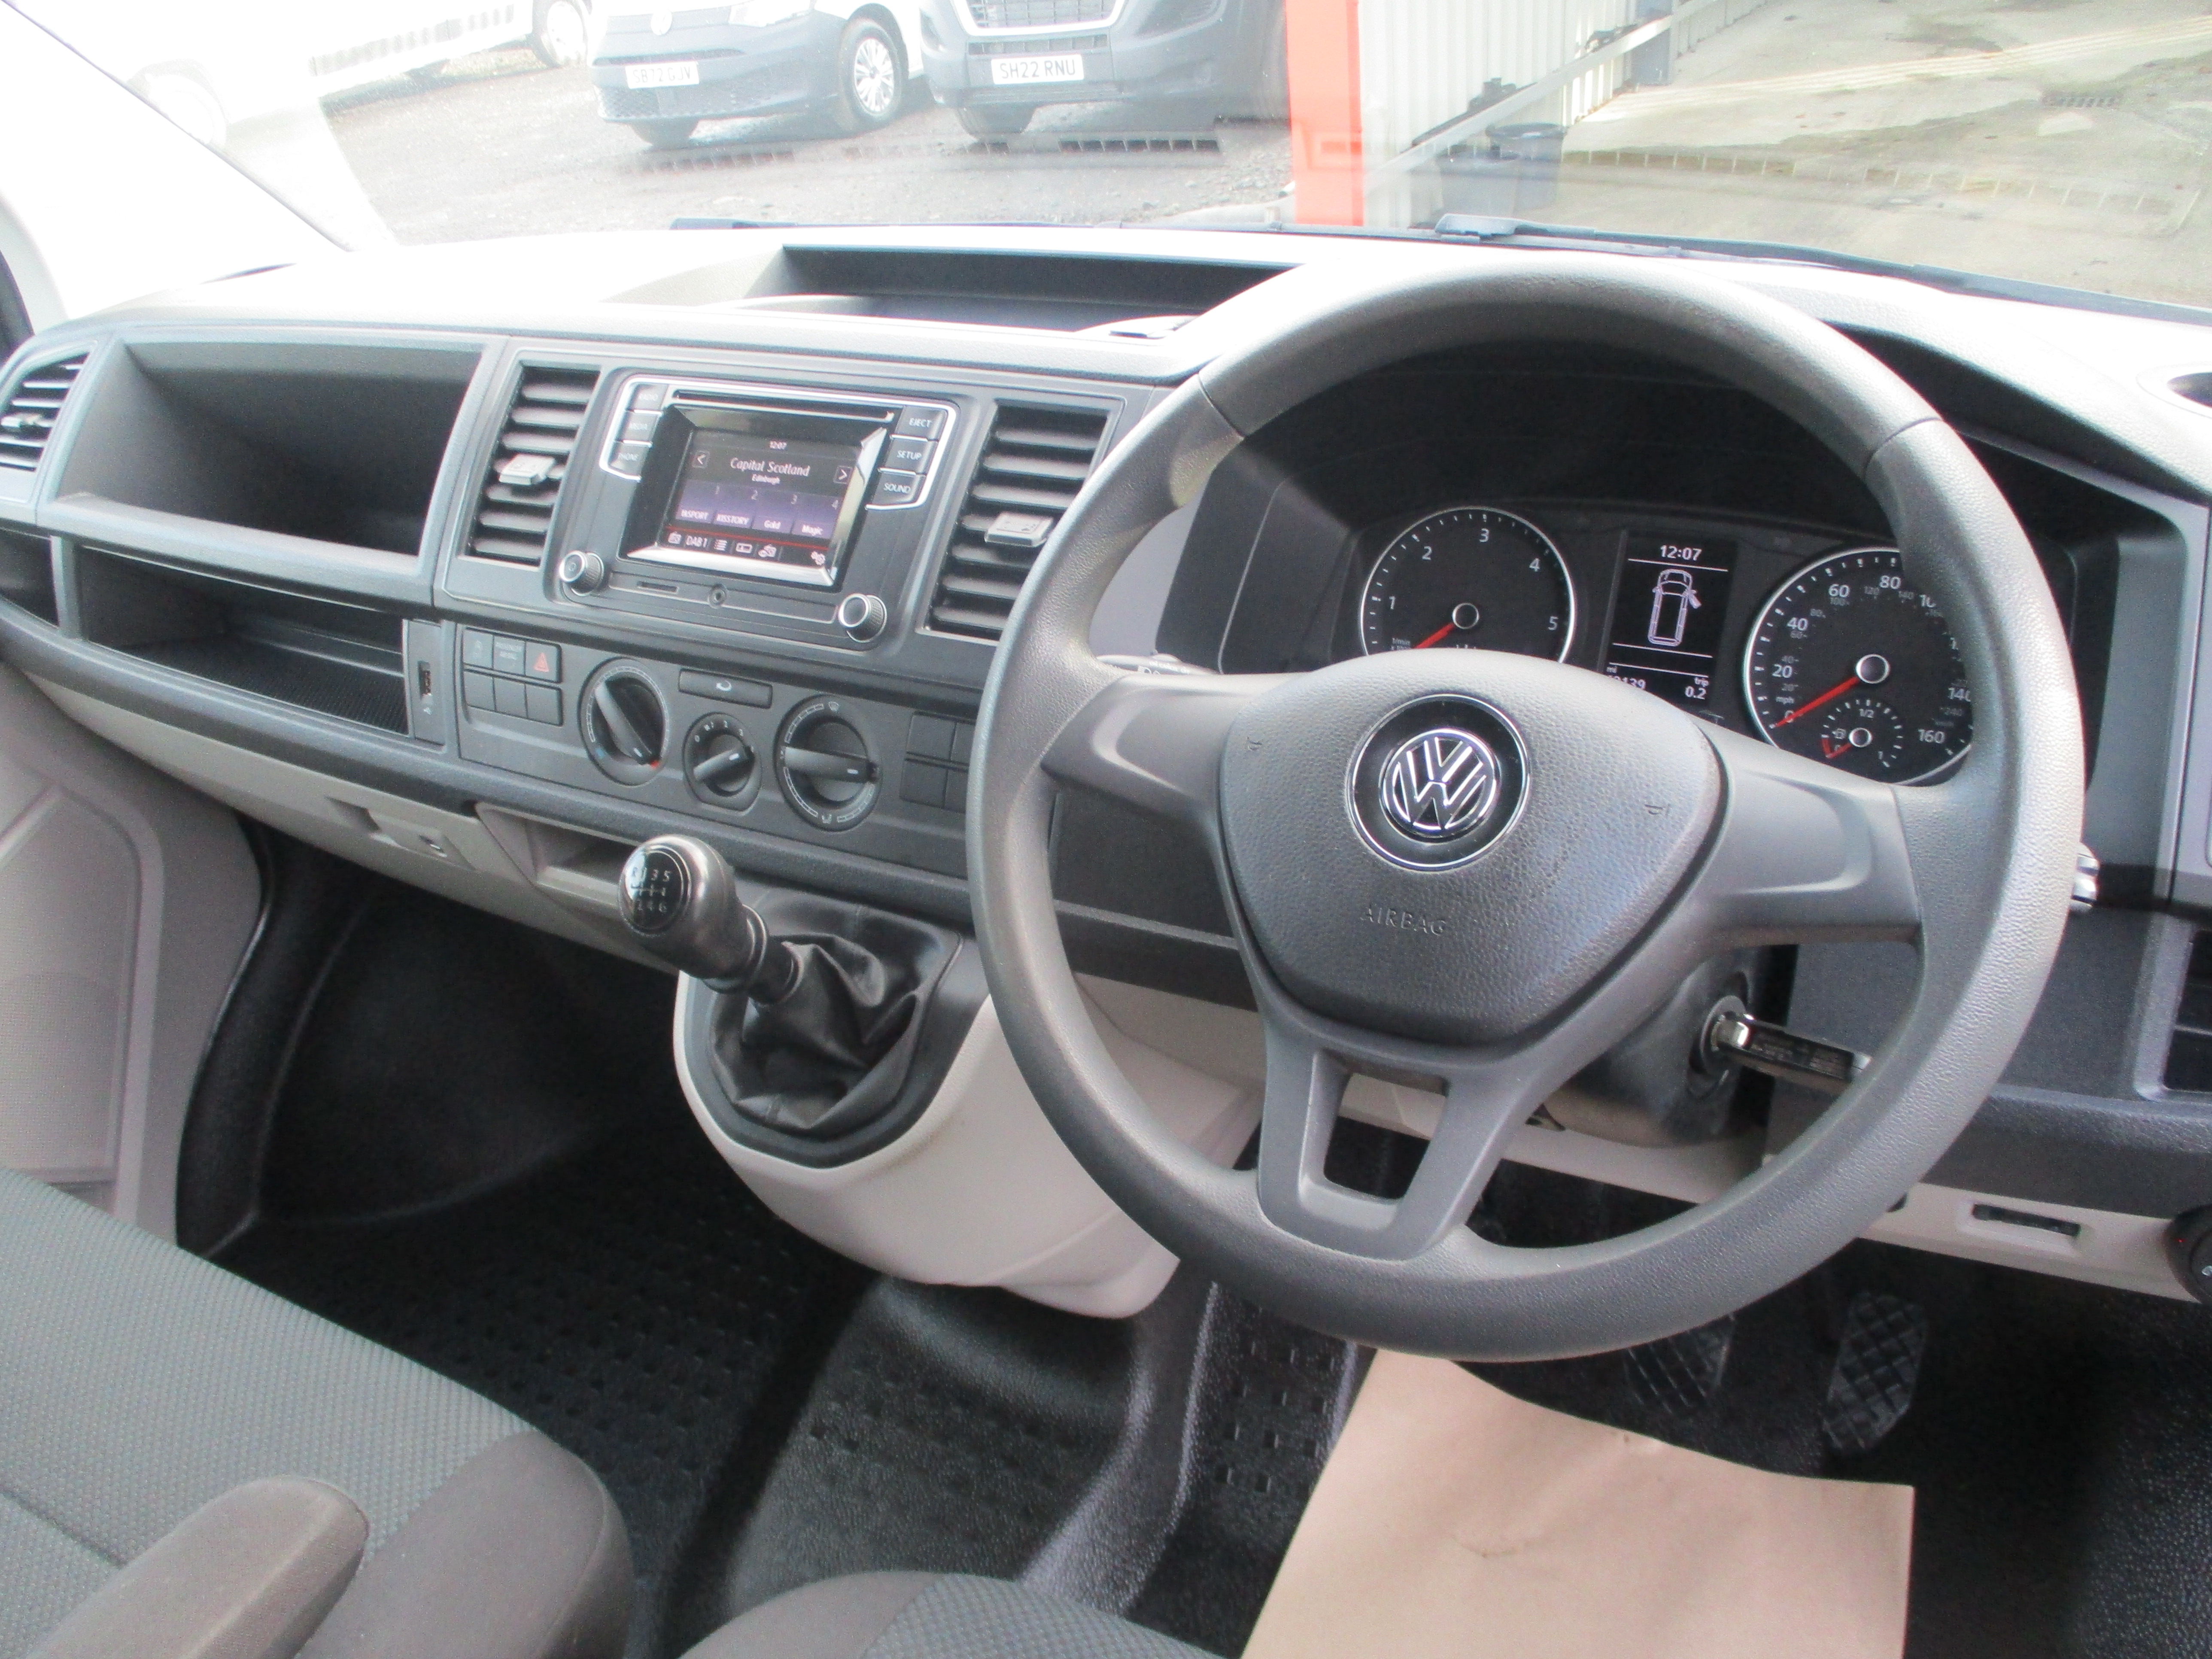 Volkswagen Transporter T30 LWB 2.0 TDi BlueMotion 150PS Trendline Van ( MASSIVE SAVING OF £2,150 ON RRP !! )